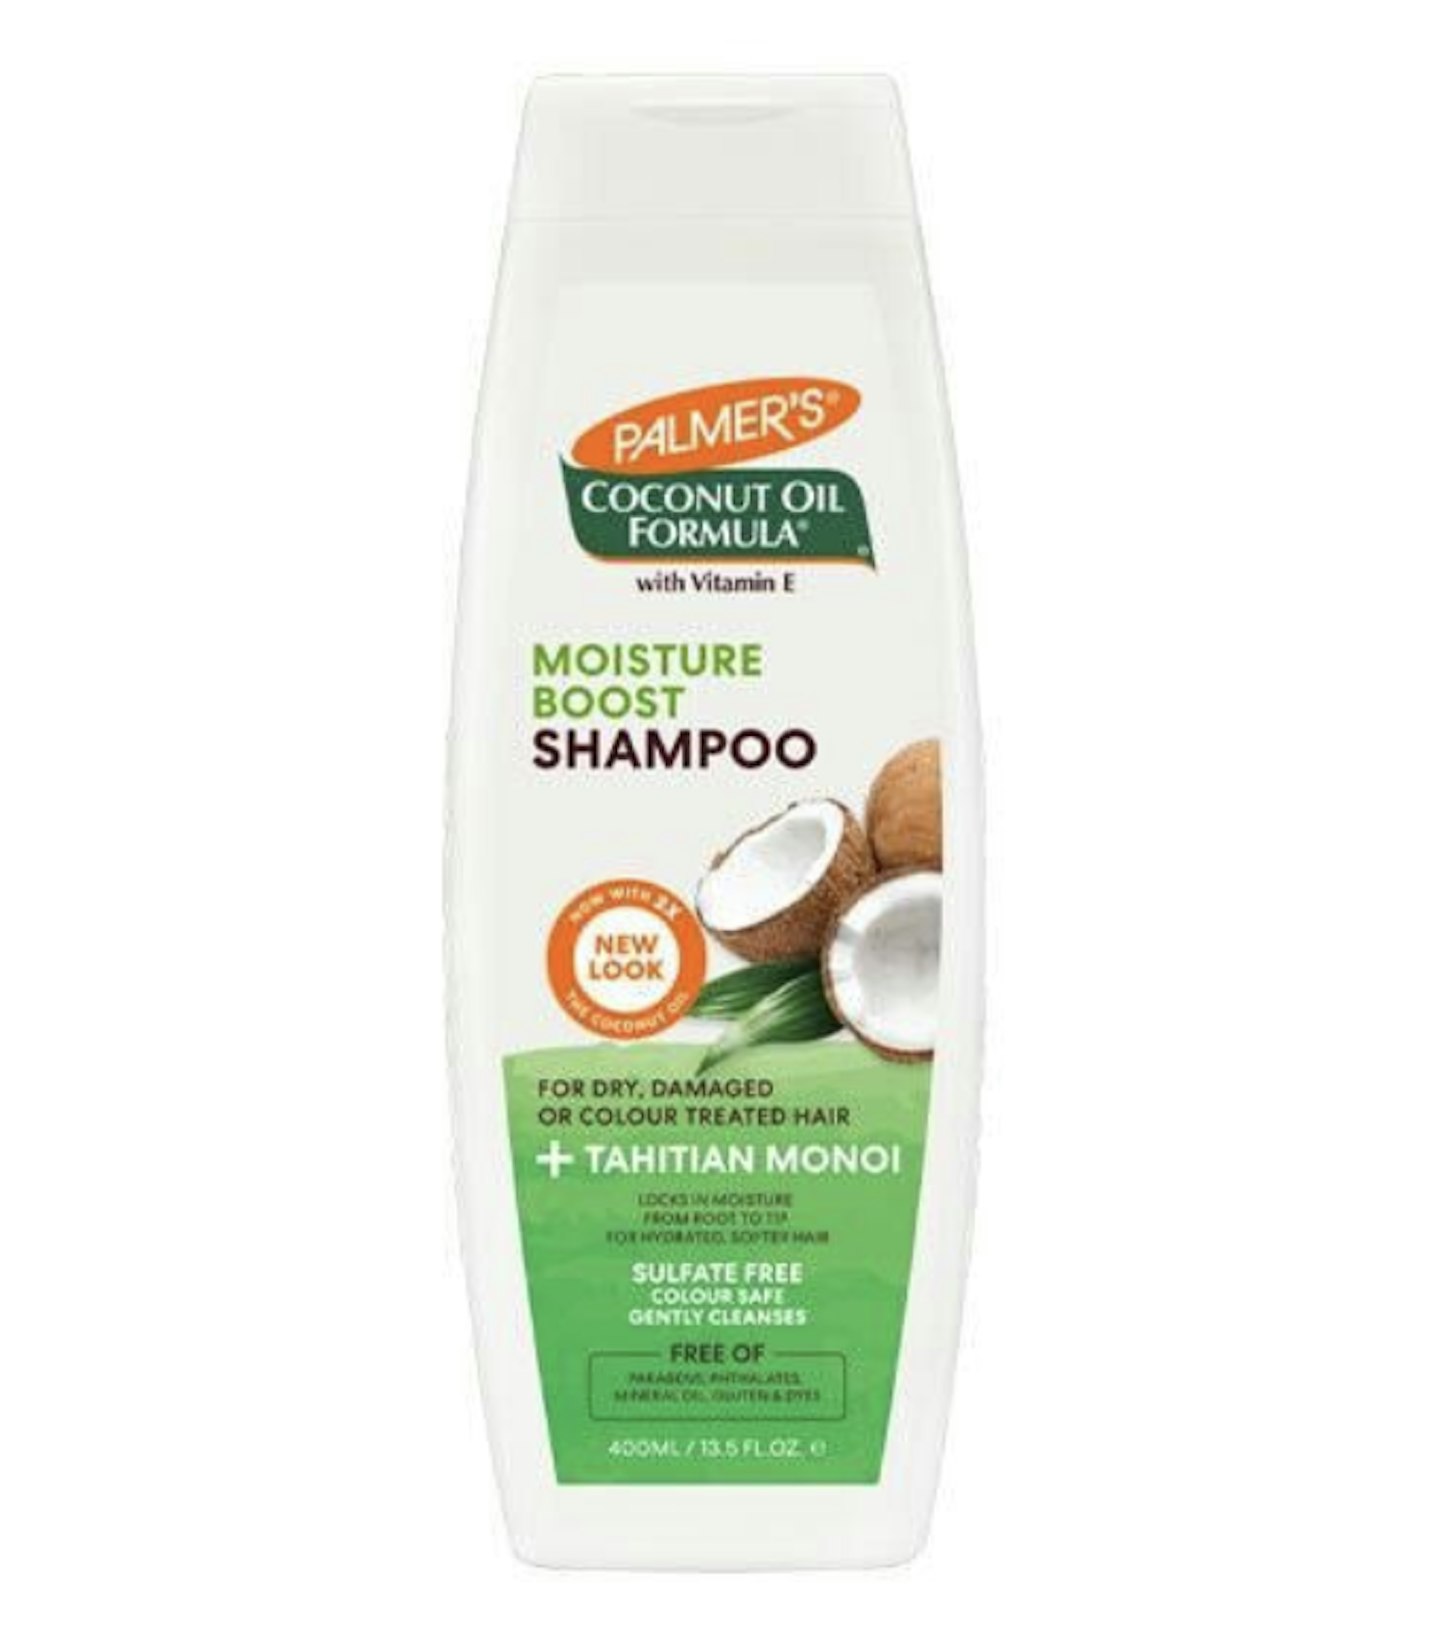 https://www.superdrug.com/hair-care/colour-protect-shampoo/palmers-coconut-formula-moisture-boost-shampoo/p/818463